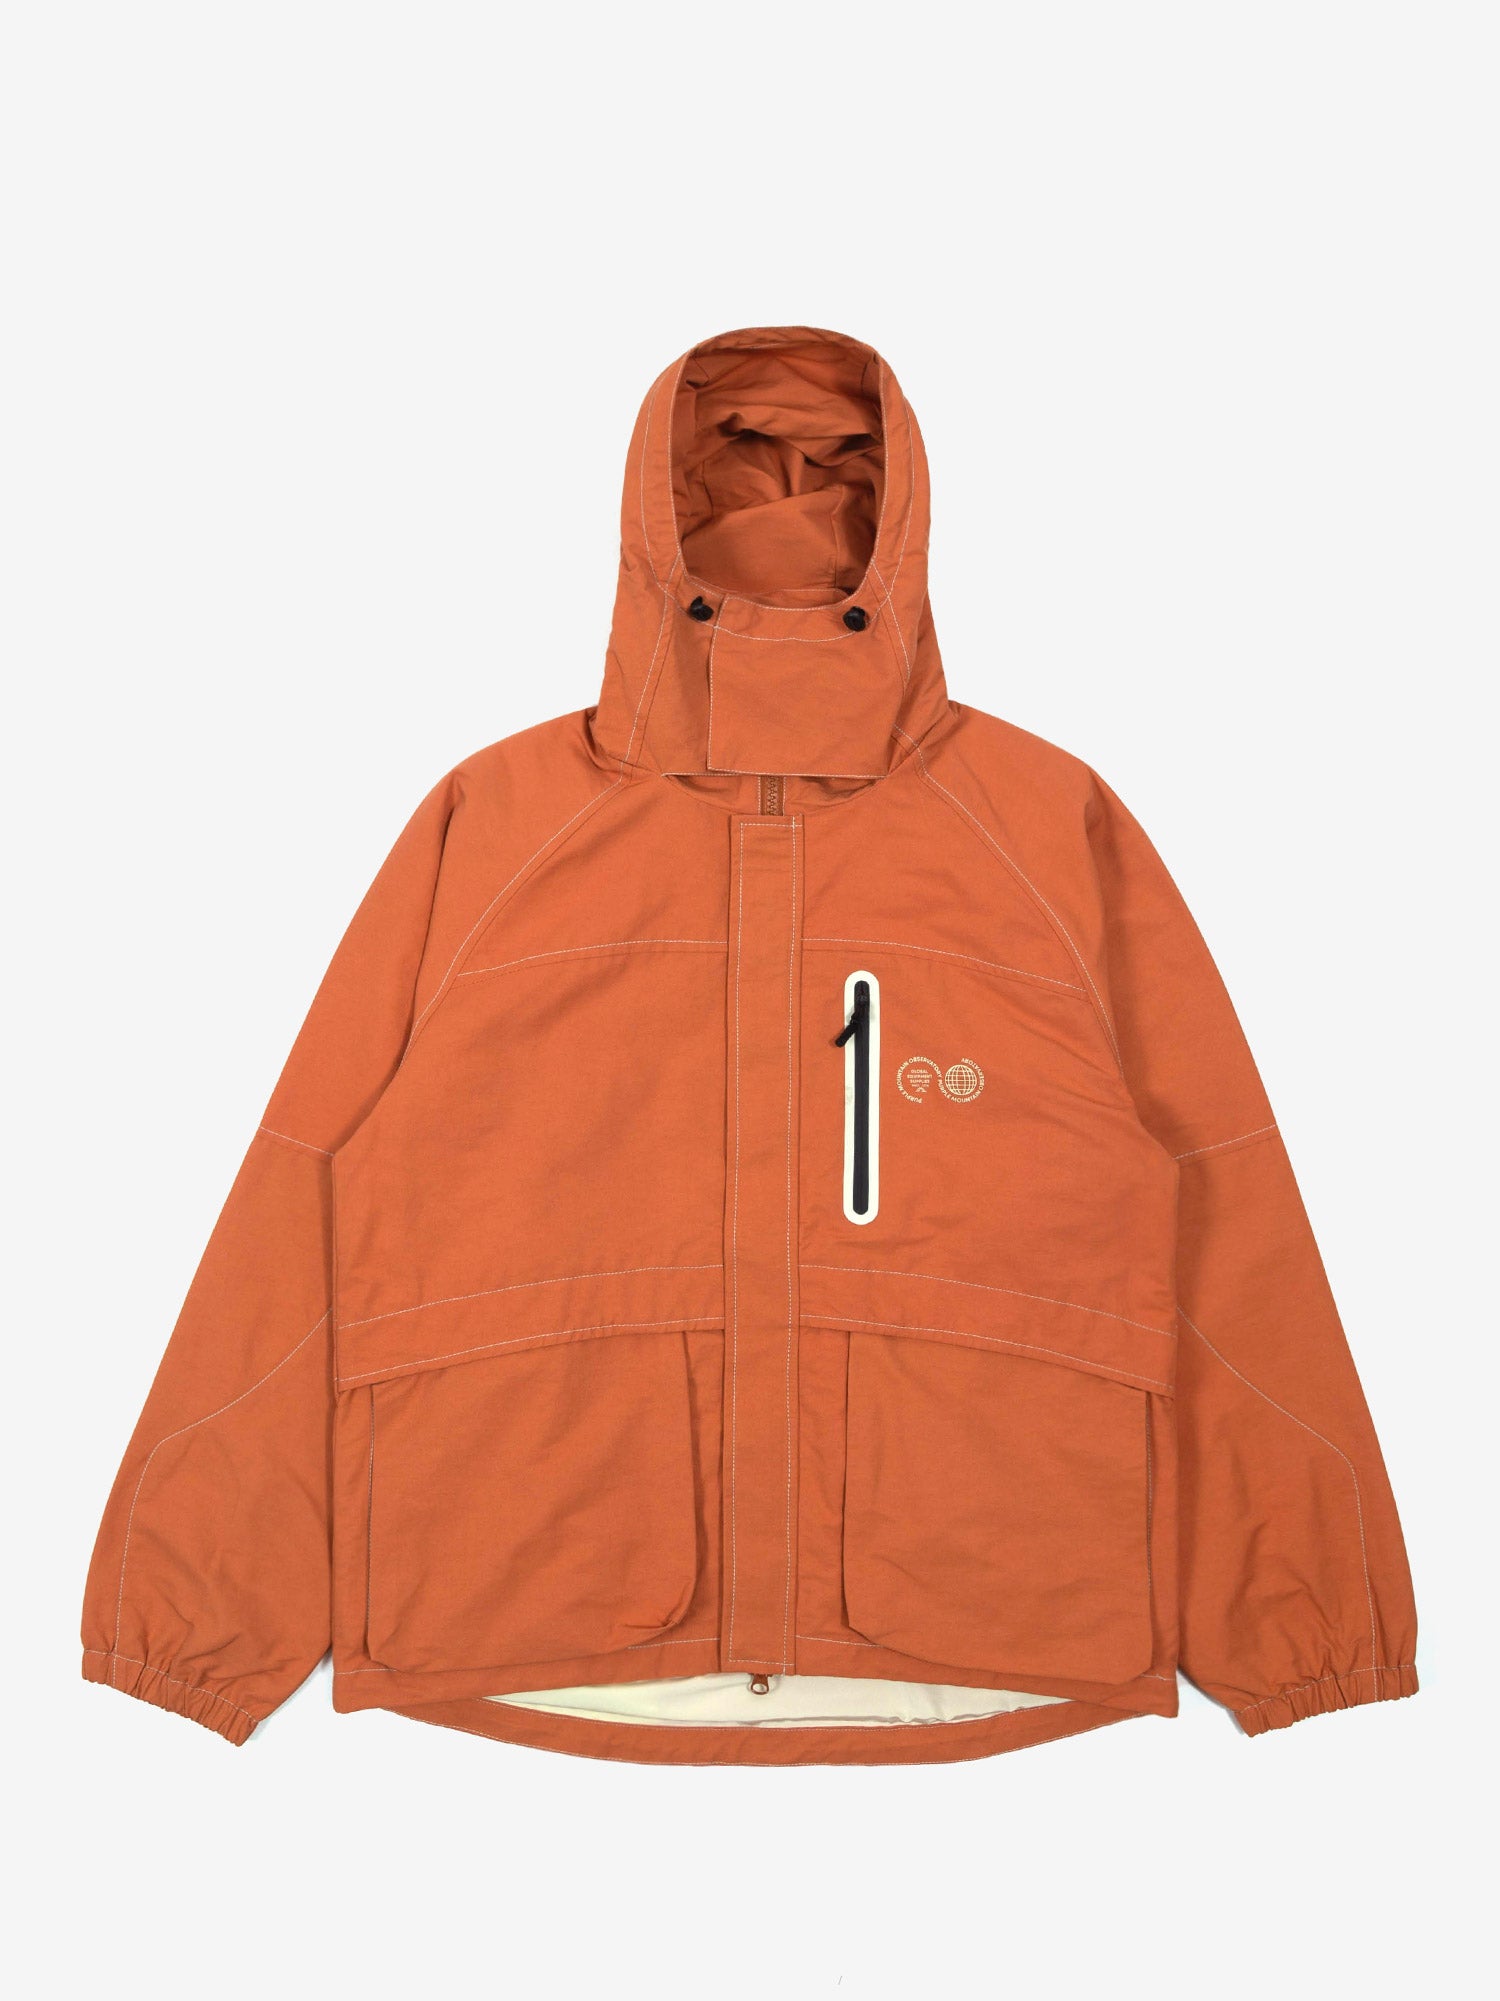 PMO Tokai Hooded Jacket Burnt Peach